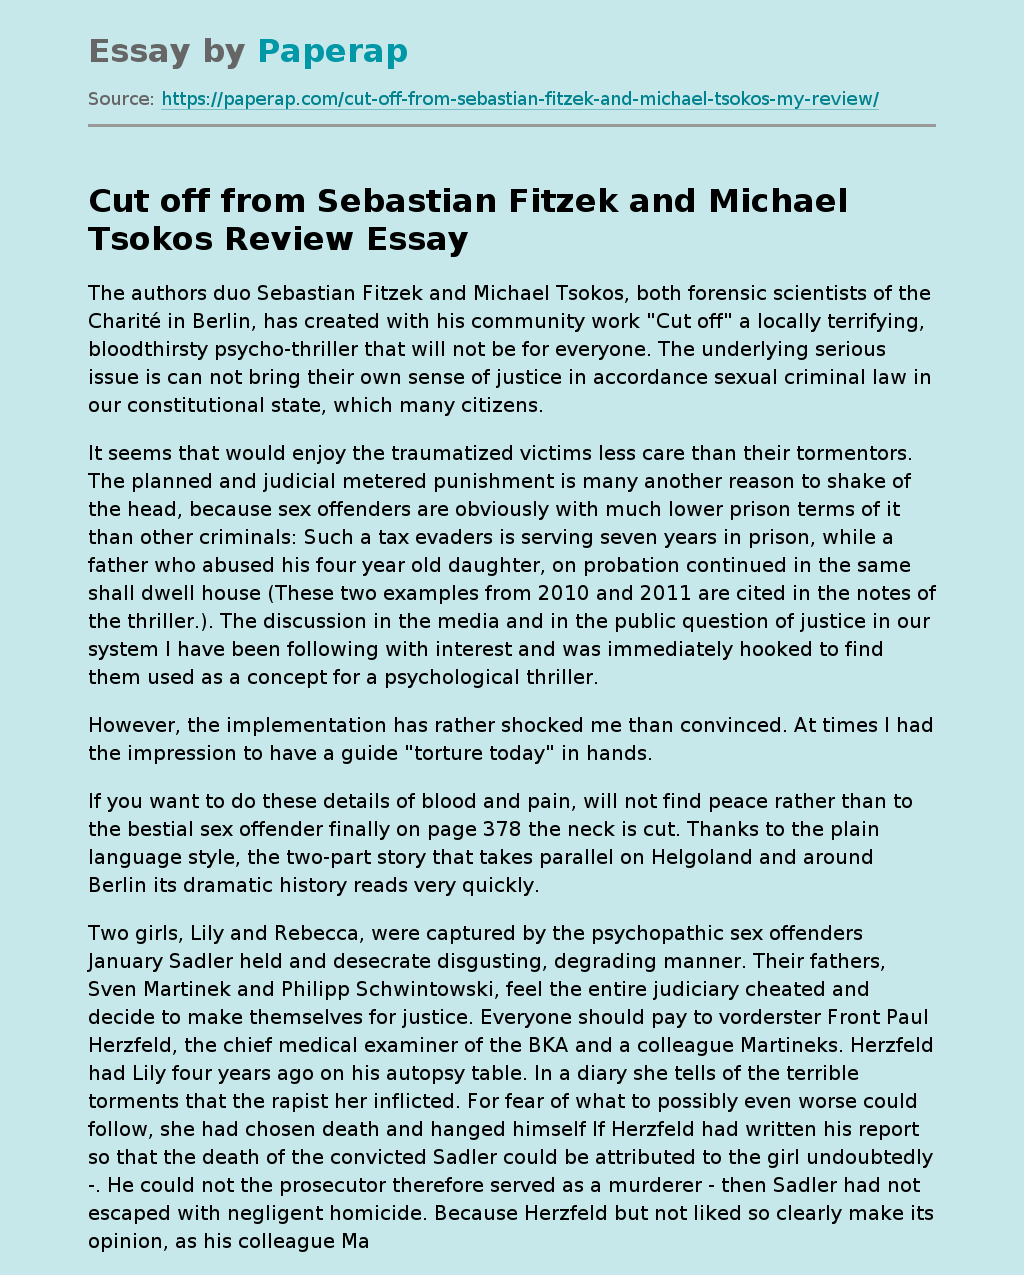 Cut off from Sebastian Fitzek and Michael Tsokos Review